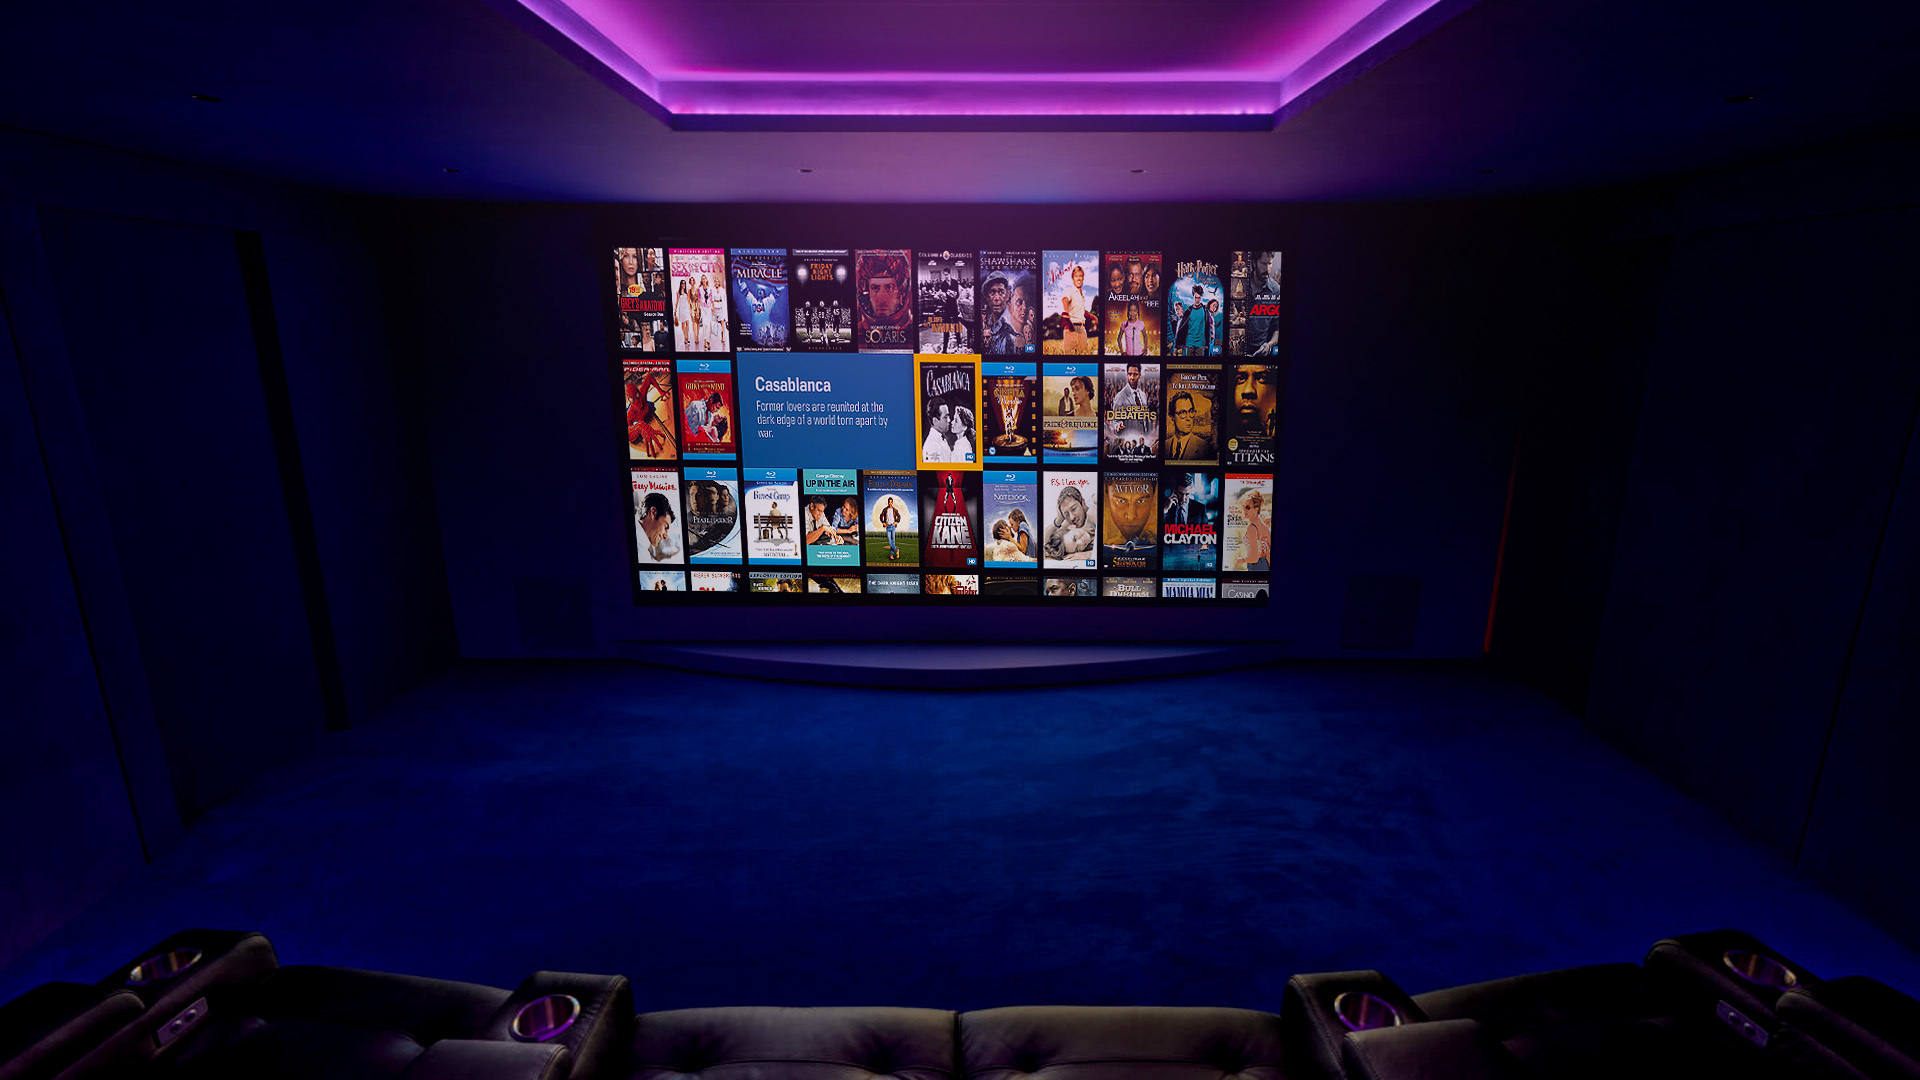 Cinema room with movies